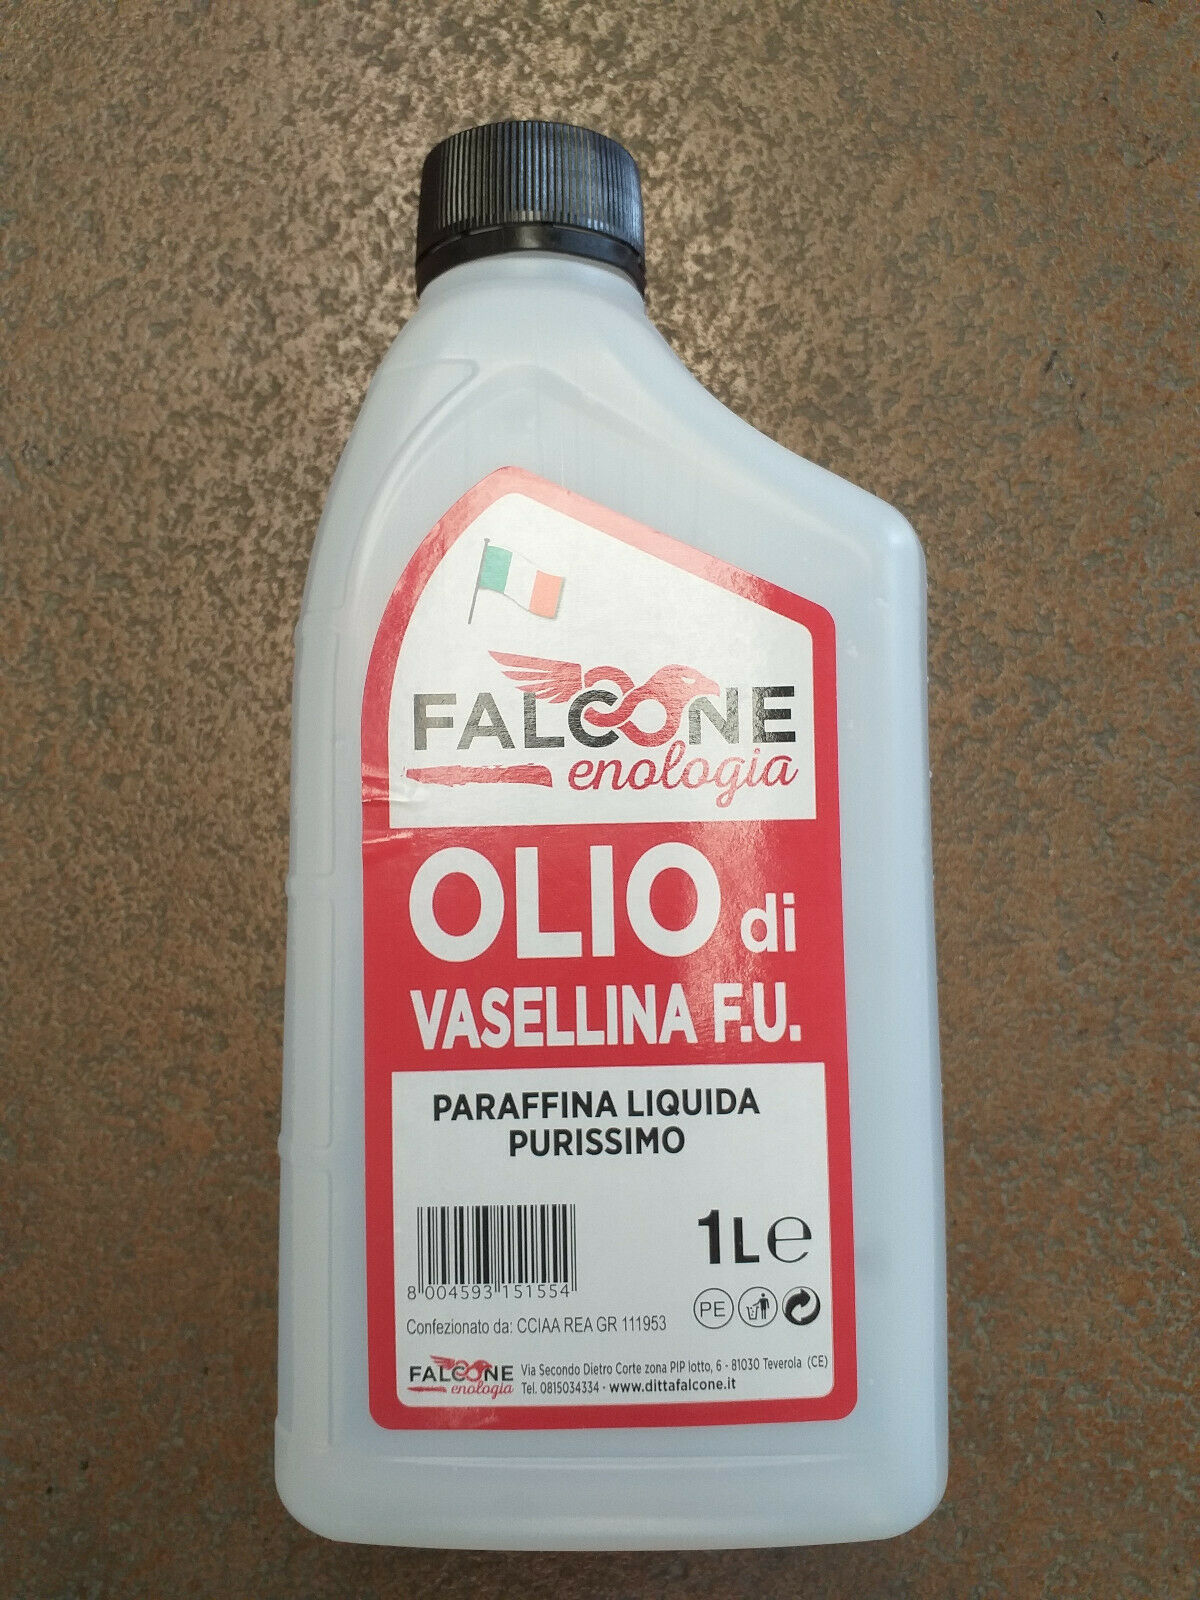 Olio di vaselina FU paraffina liquida - uso enologico